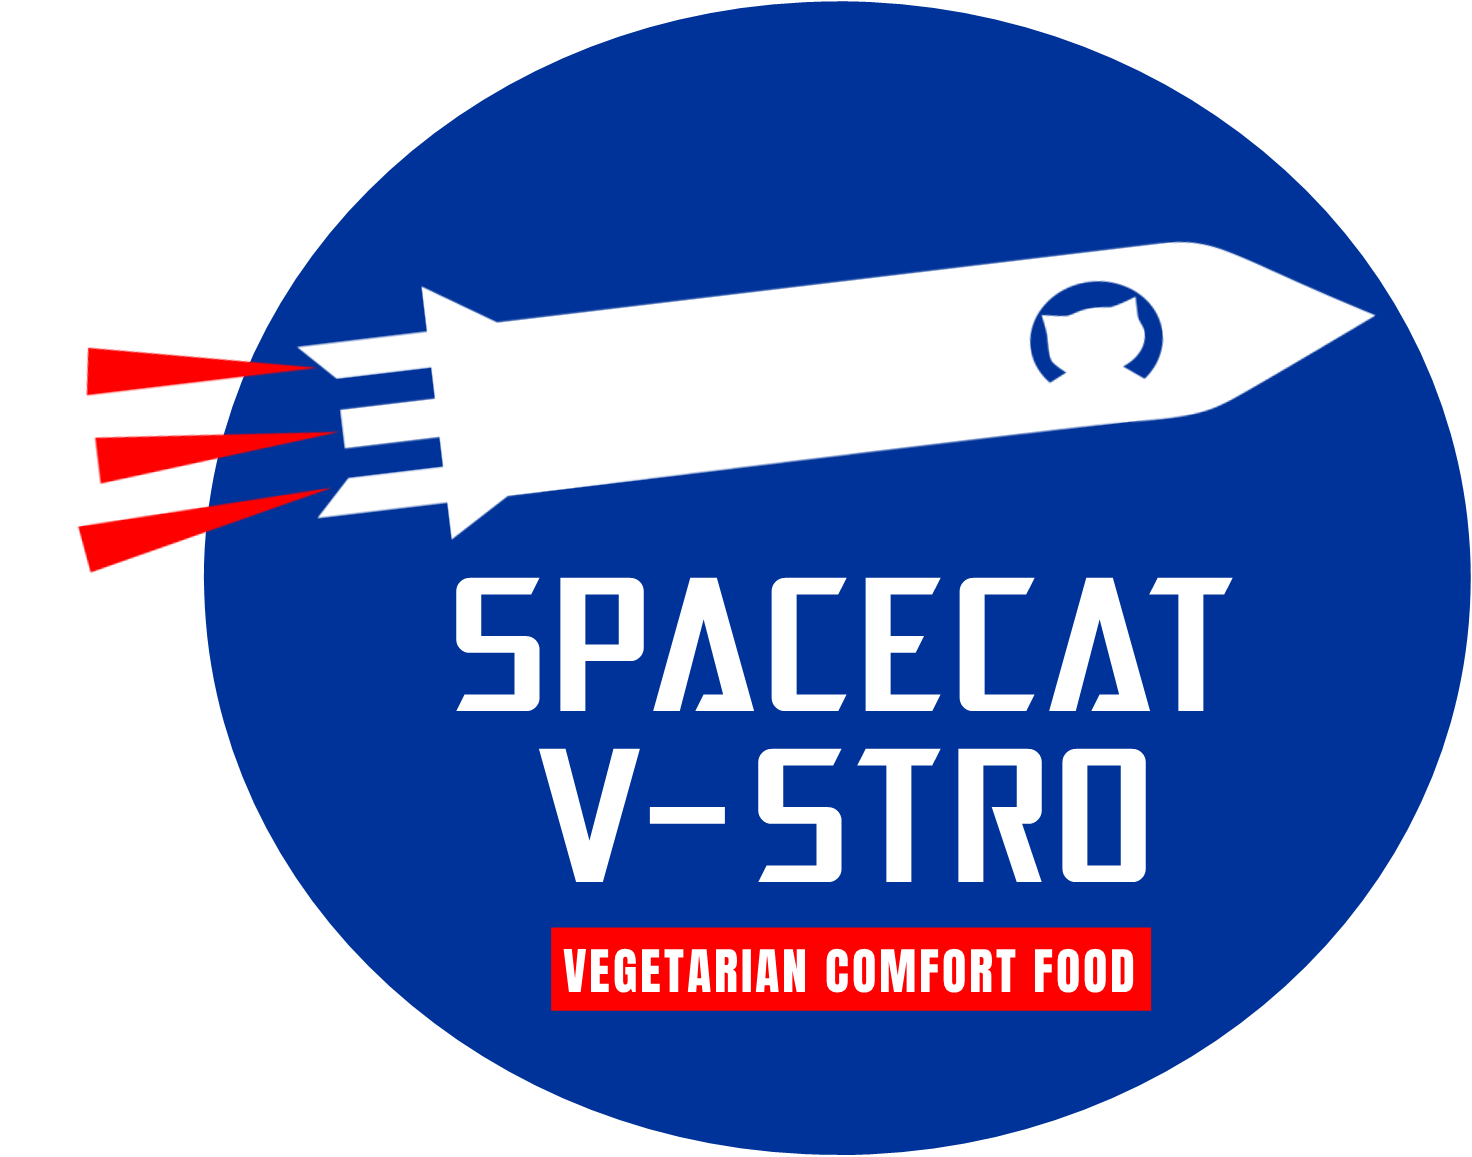 Spacecat V